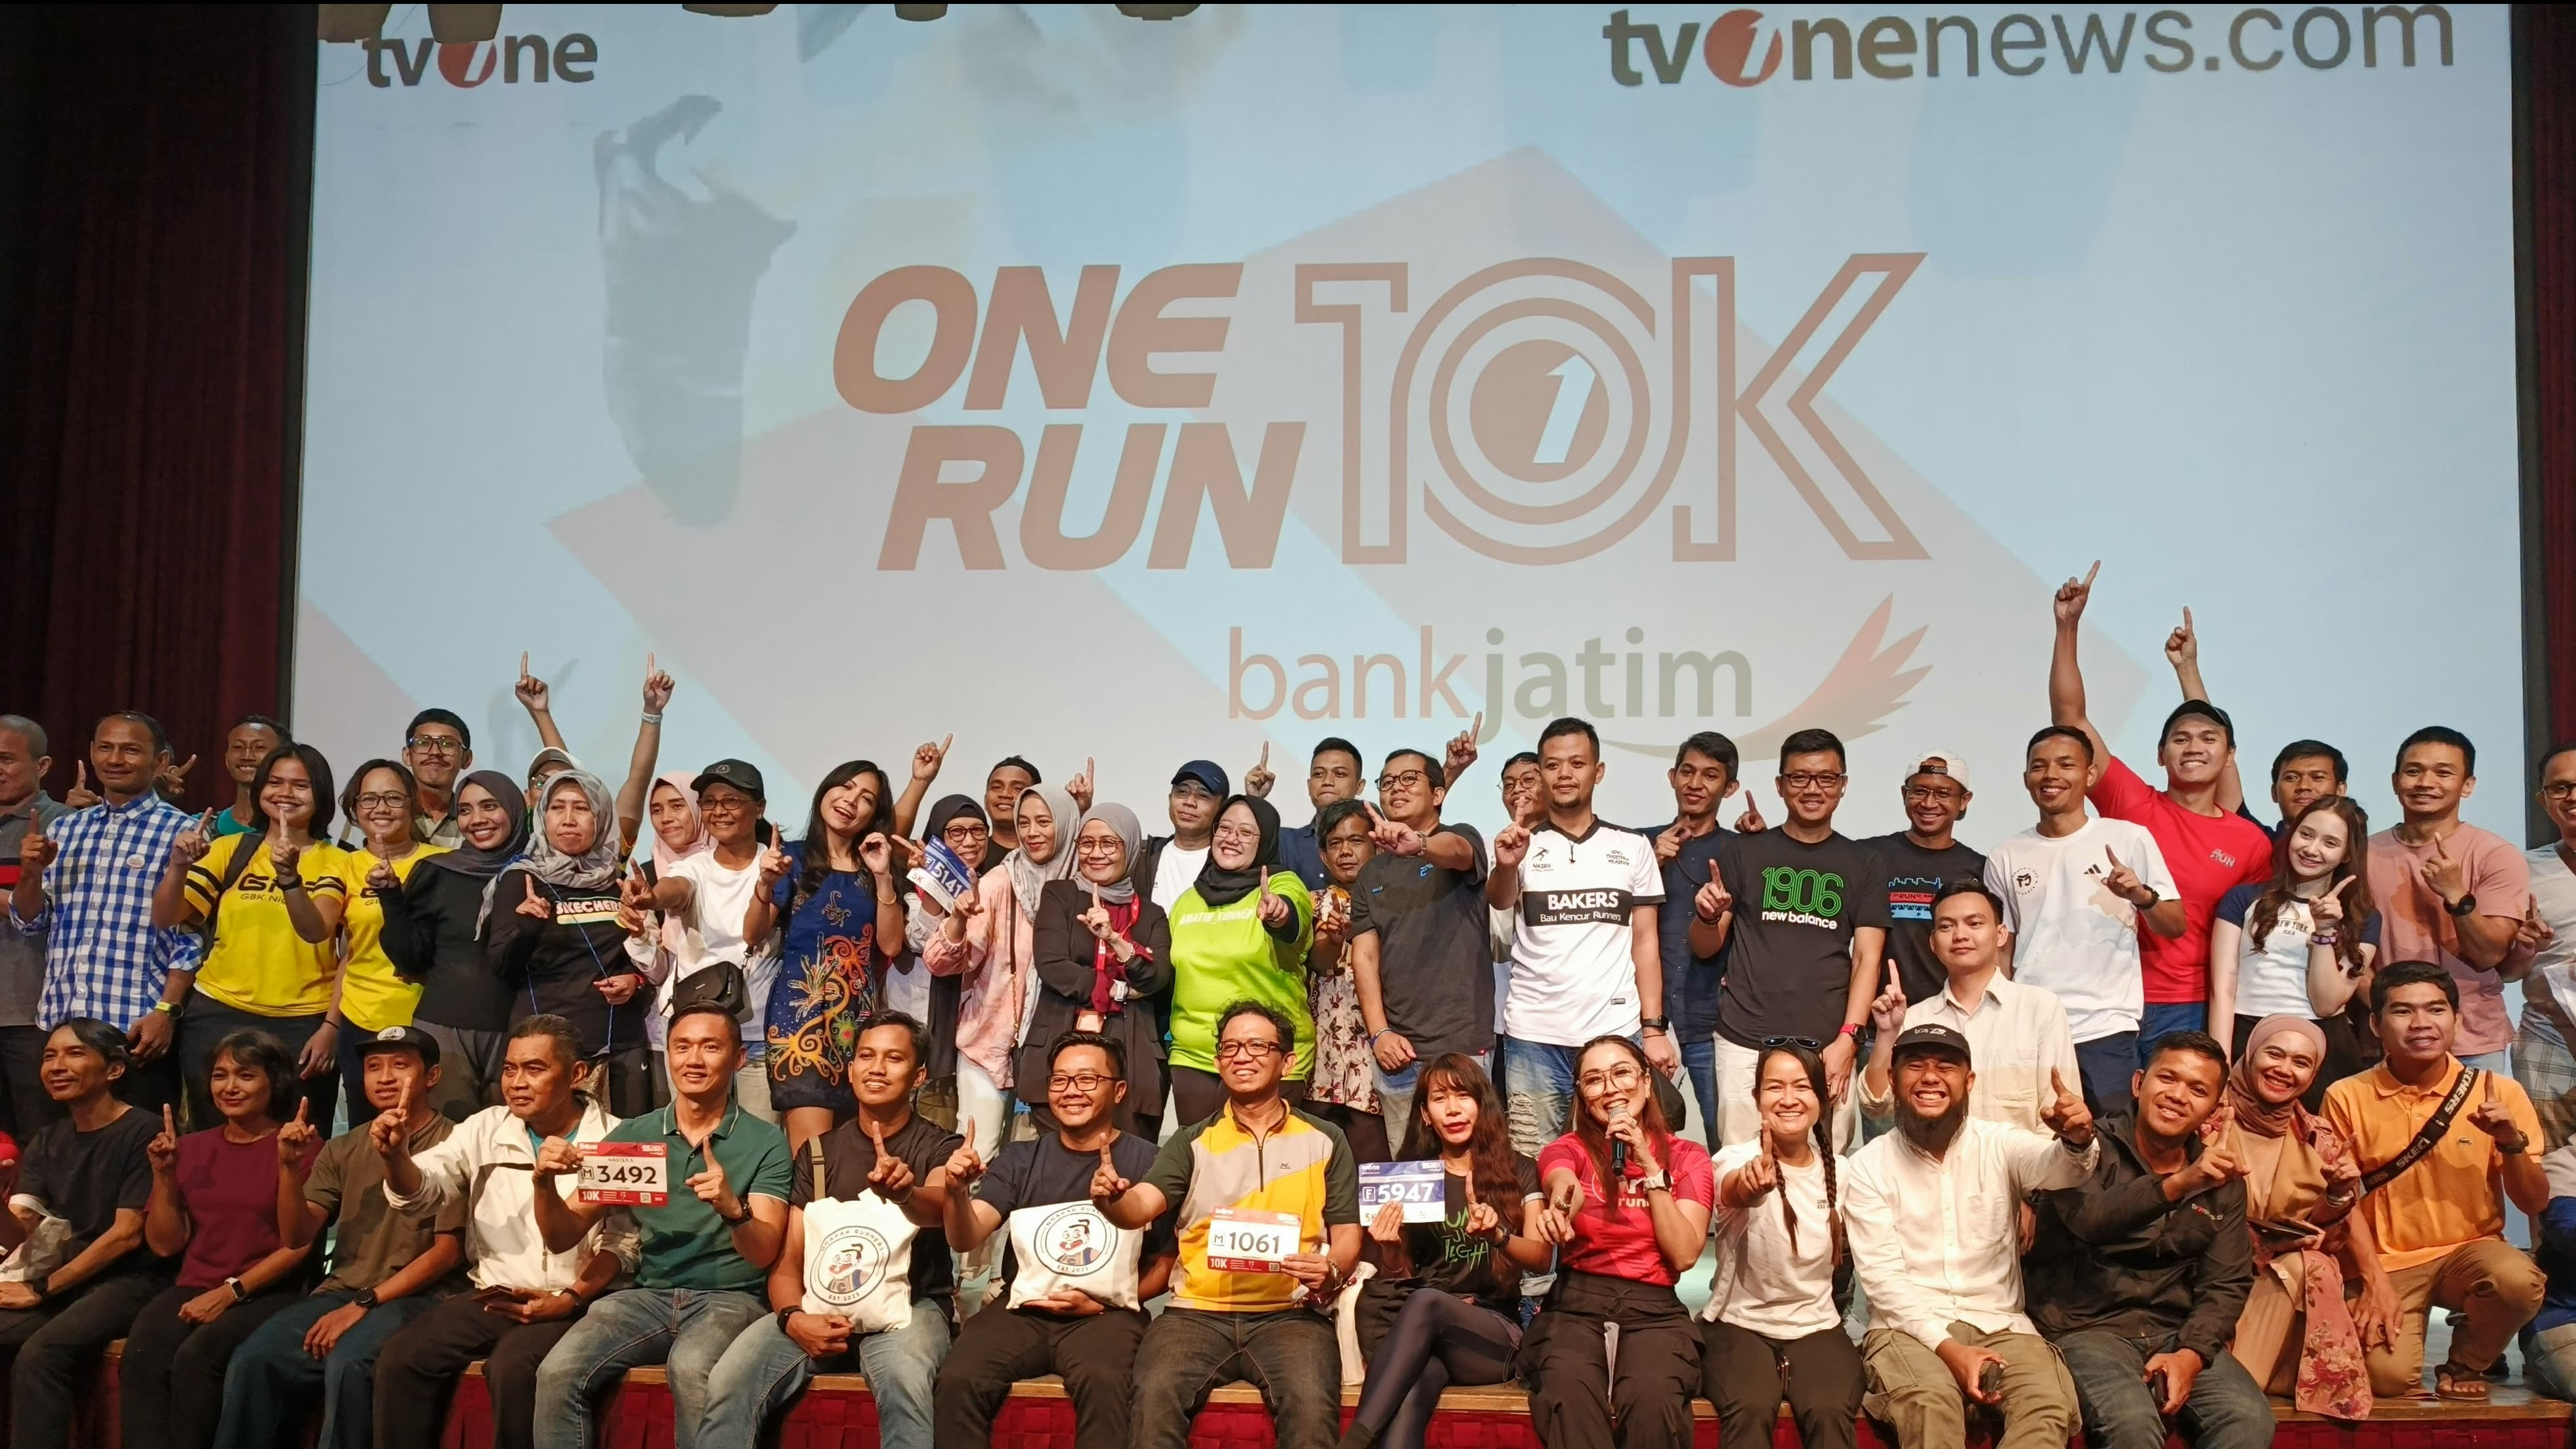 One Run 10K